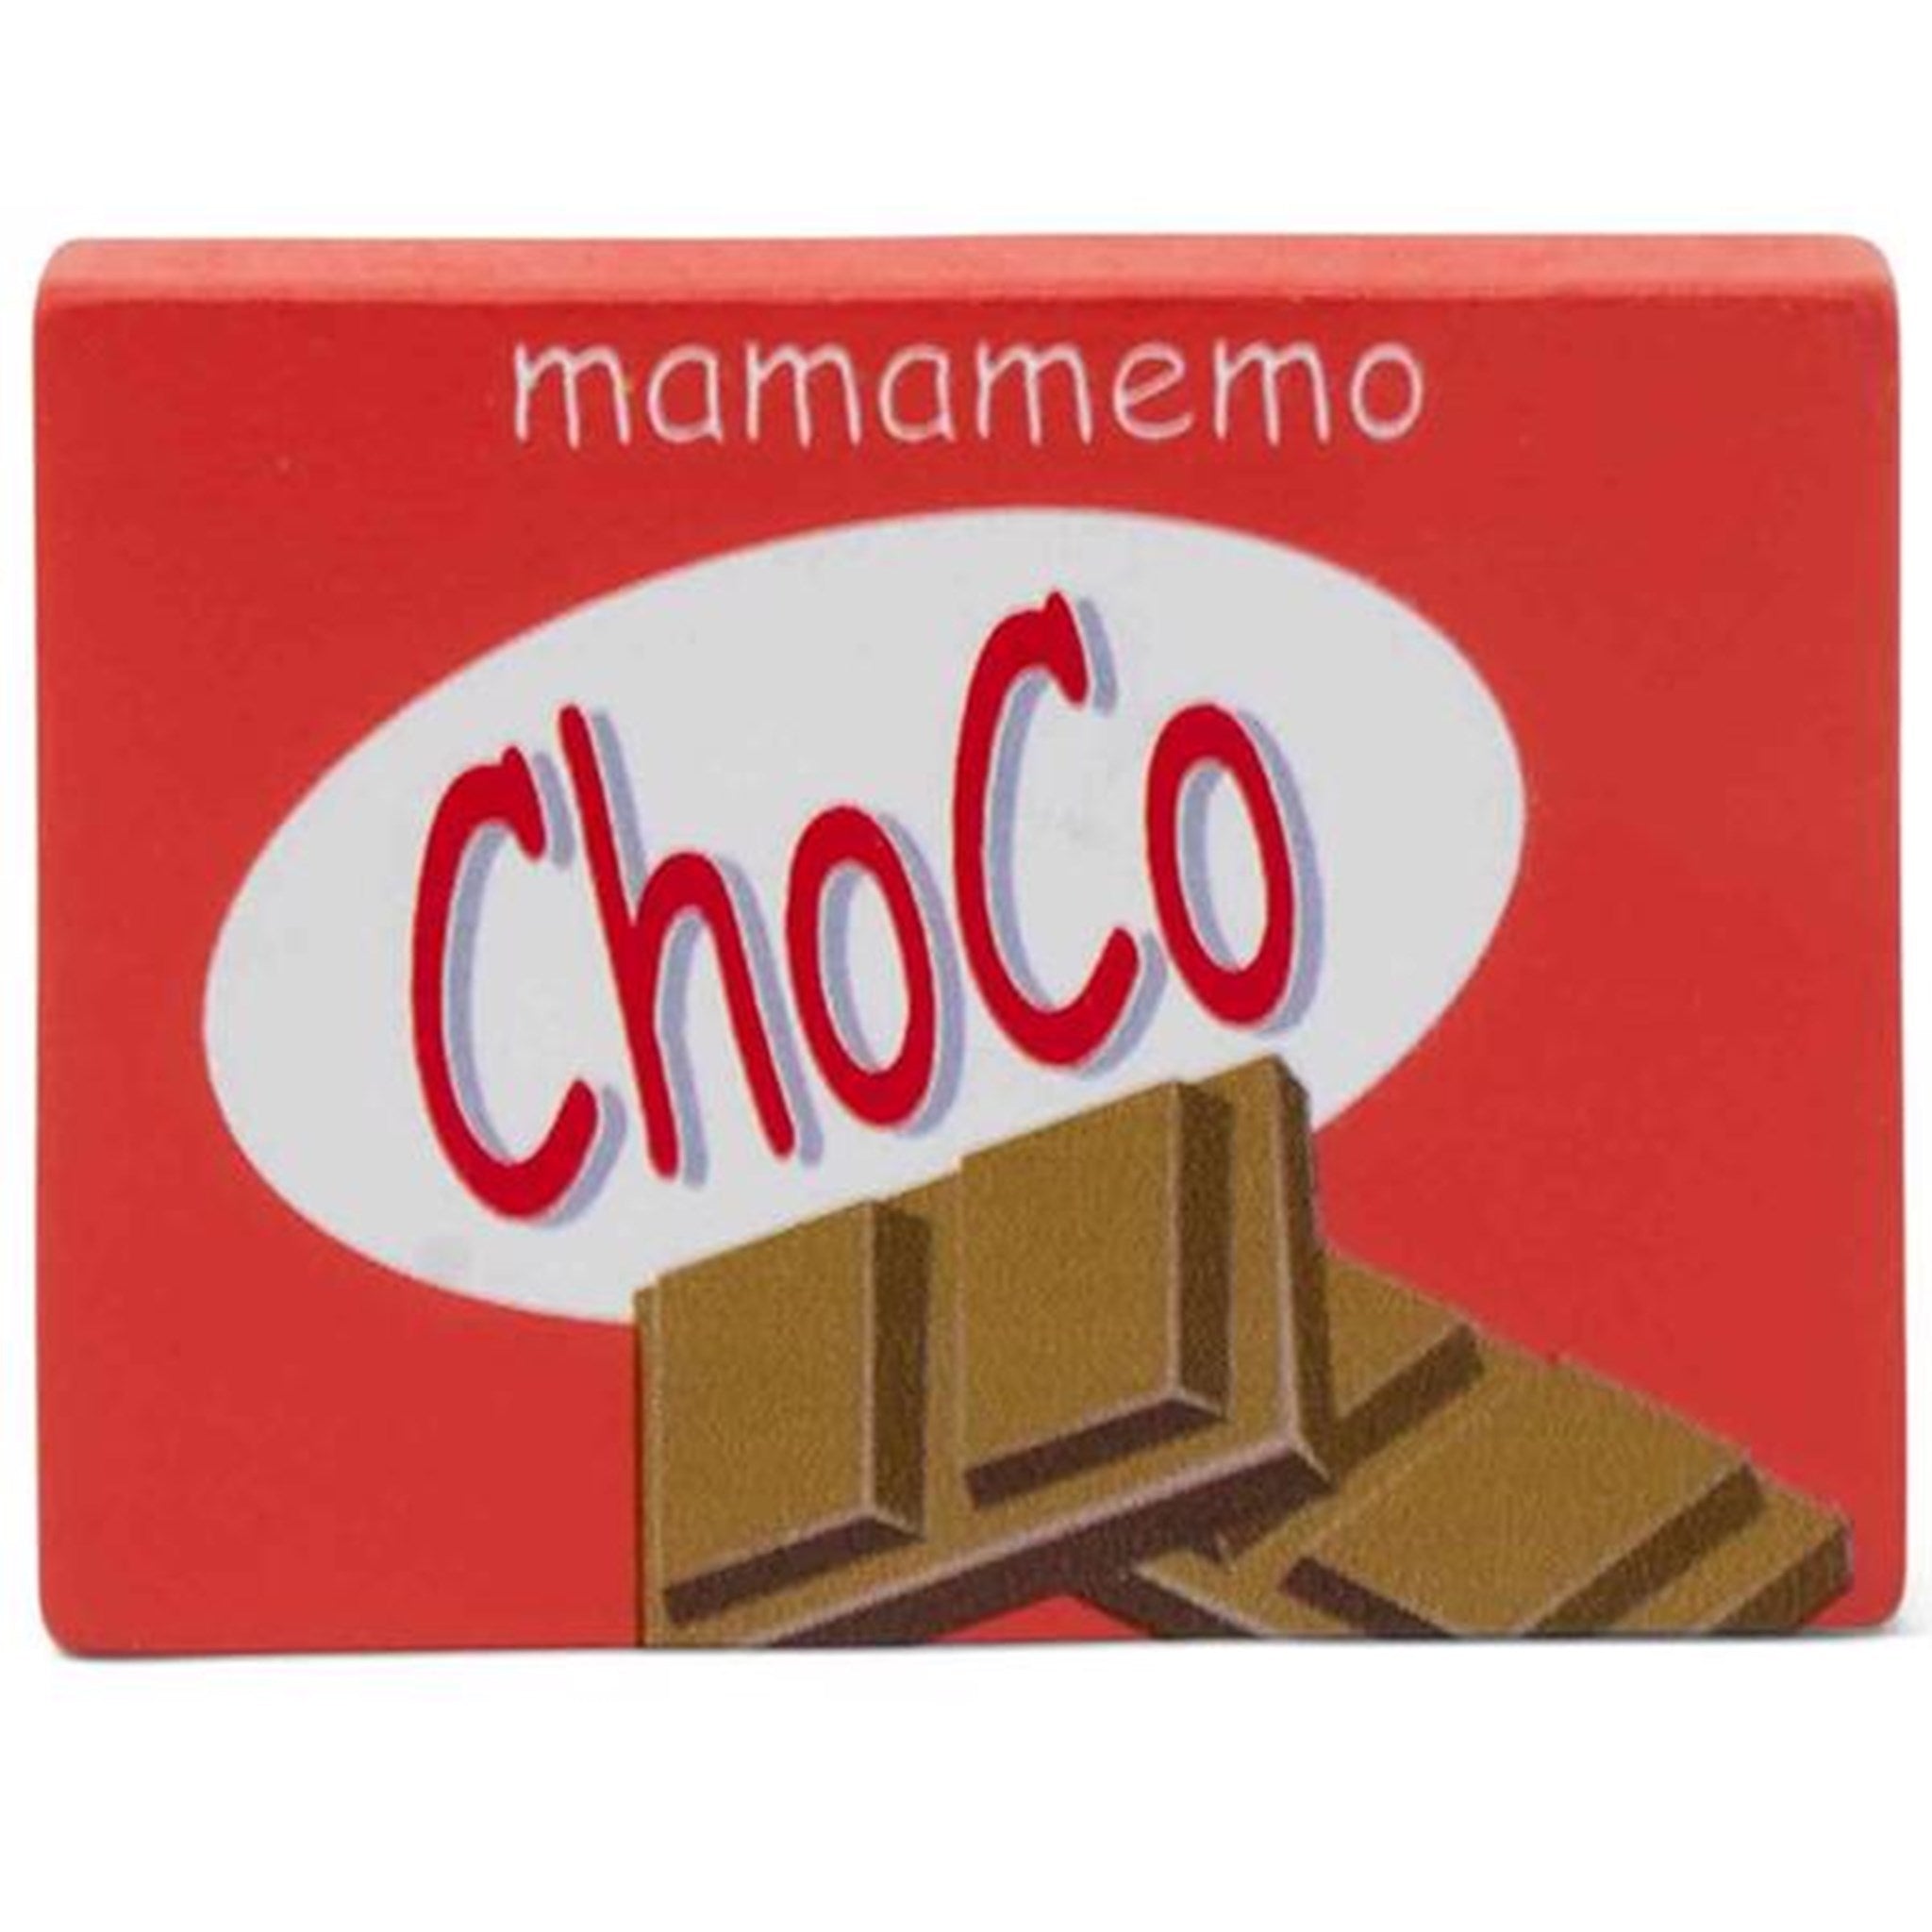 "MaMaMeMo 巧克力棒 - 为角色扮演带来的梦幻玩具